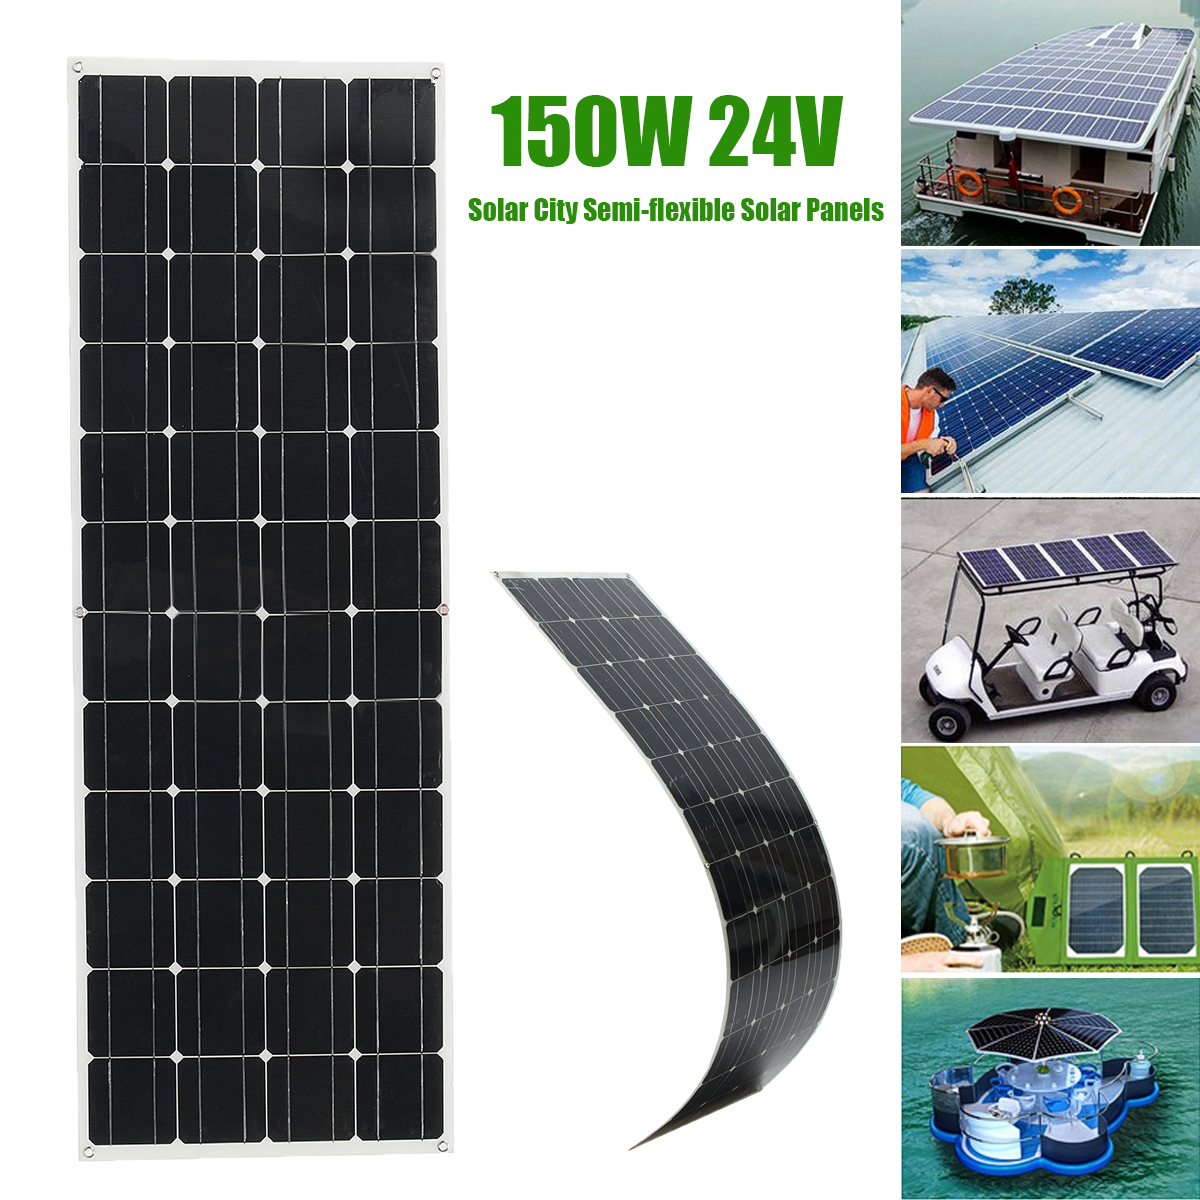 Elfeland® EL-06 150W 24V Semi Flexible Solar Panel + 1.5m Cable For Home RV Boat 7